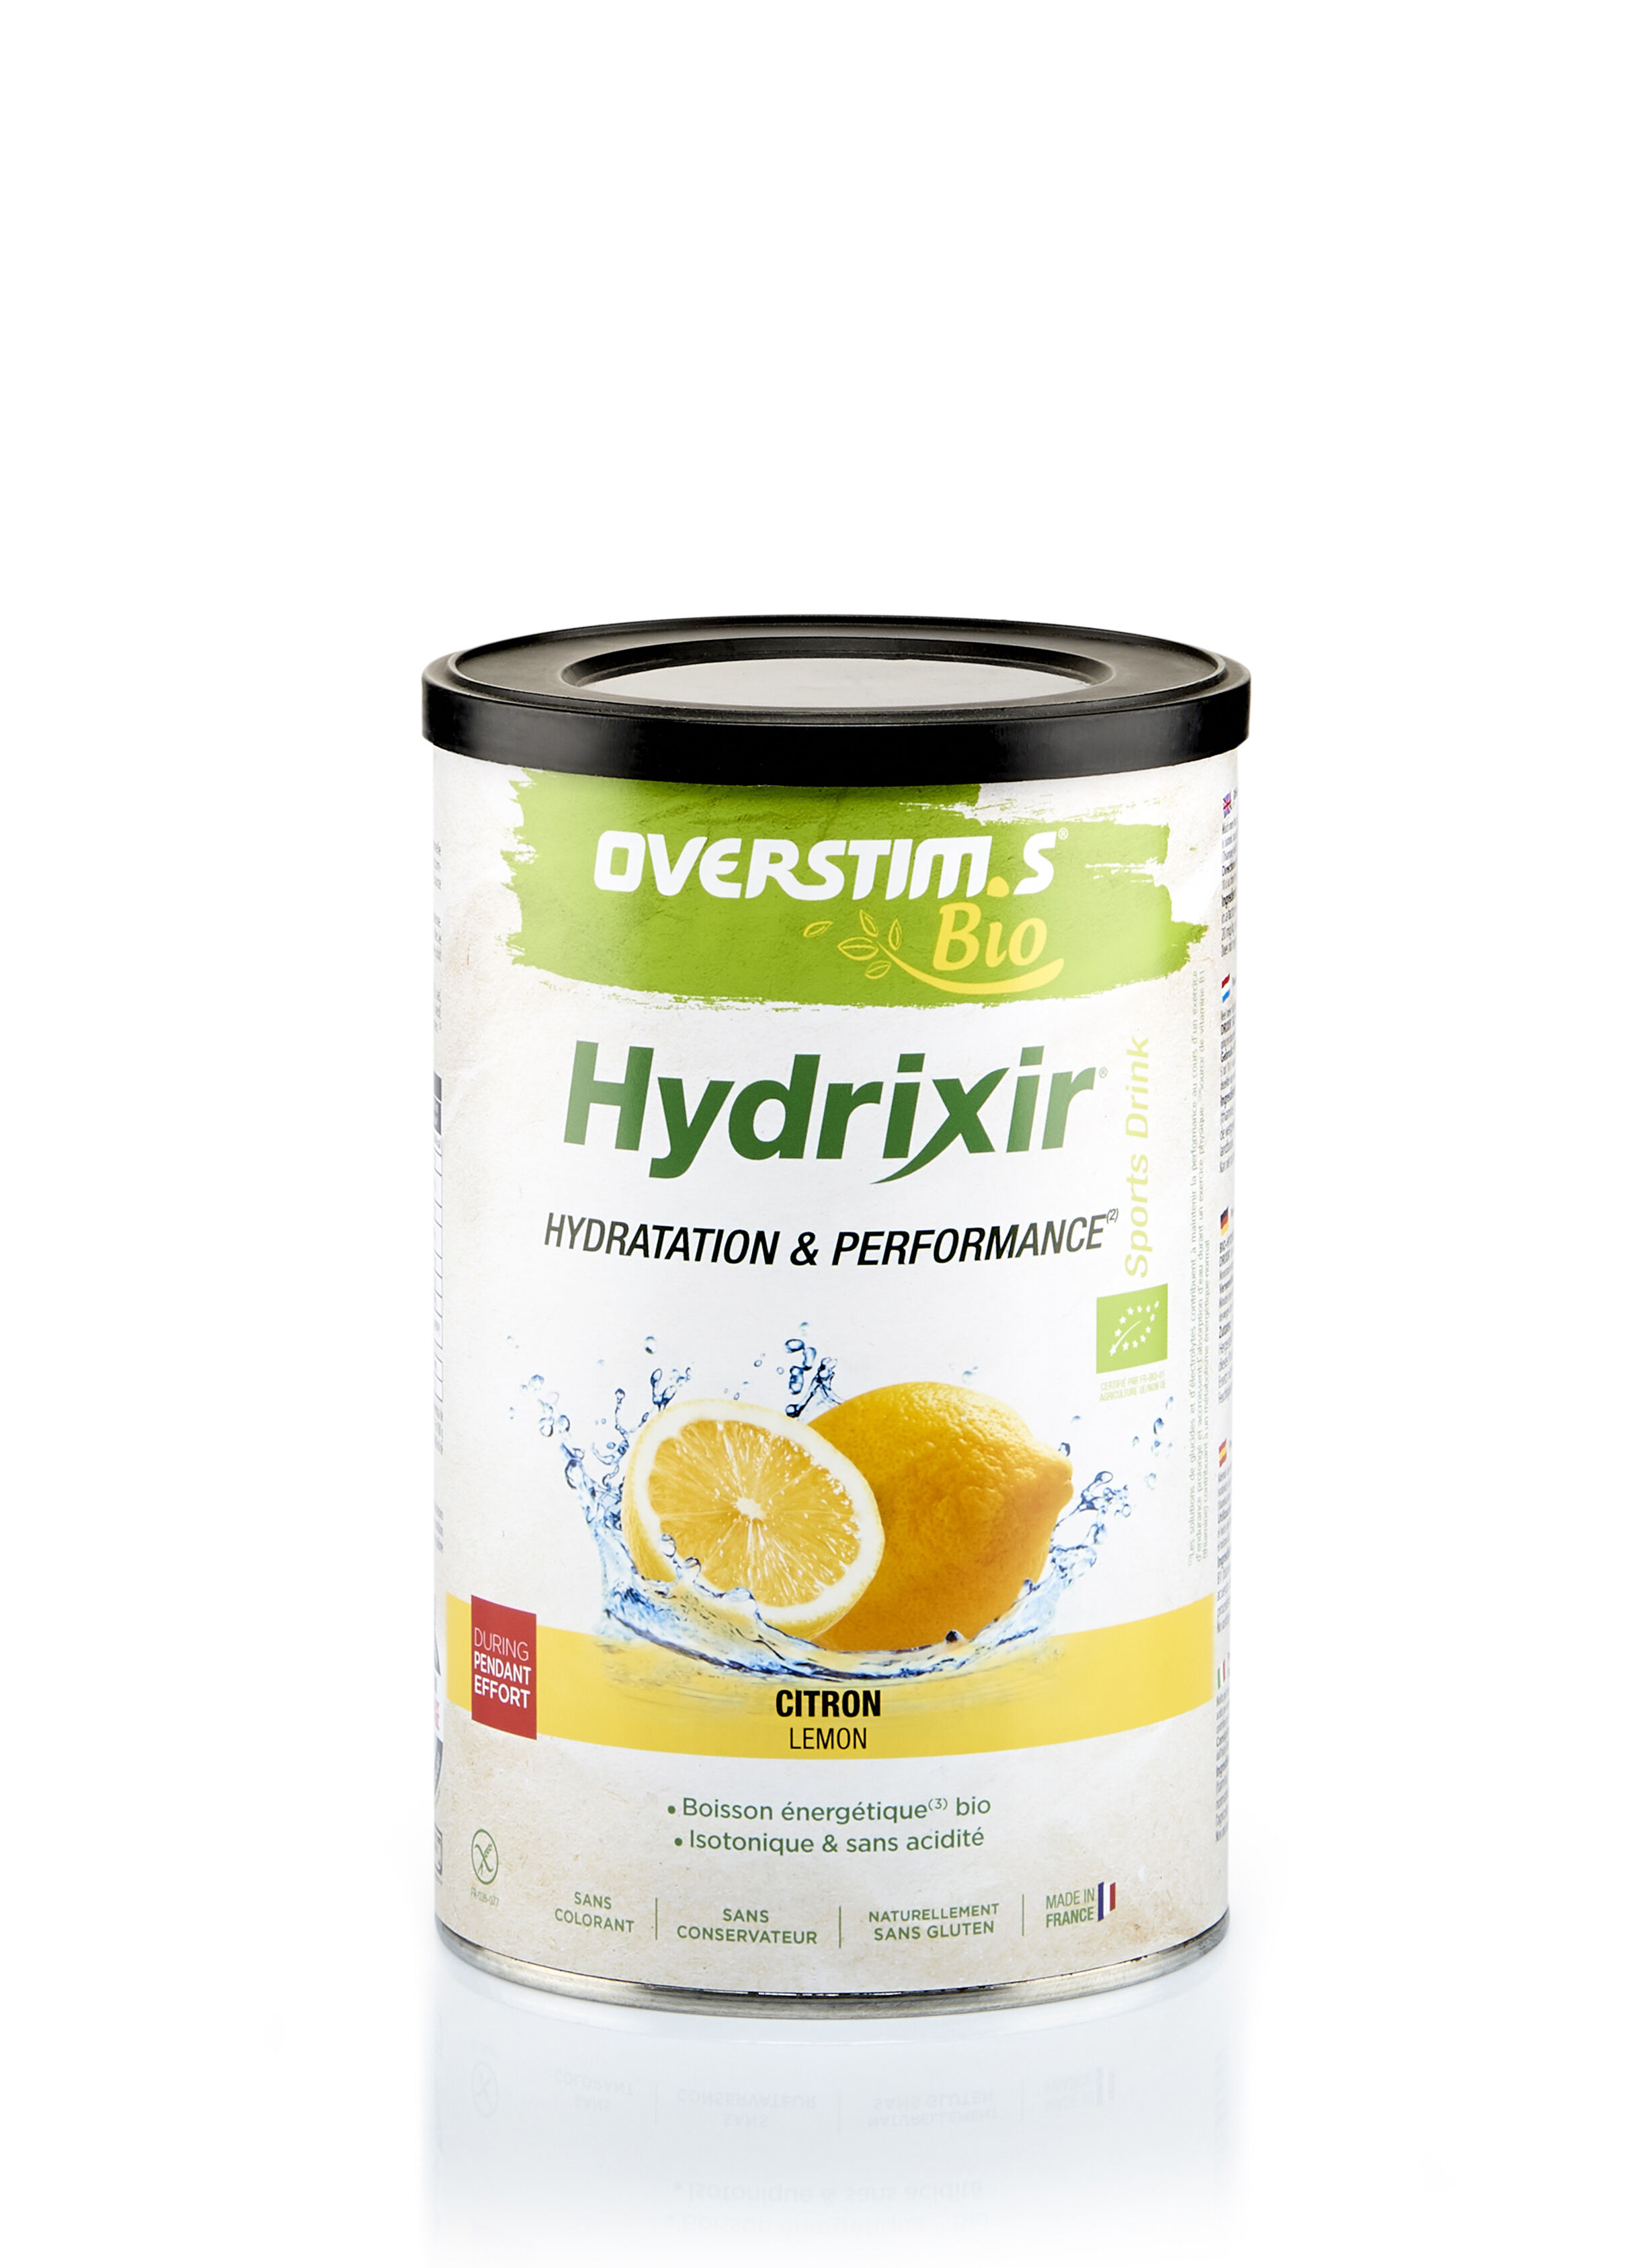 Overstim.s Hydrixir Antioxydant Bio - Boisson énergétique | Hardloop